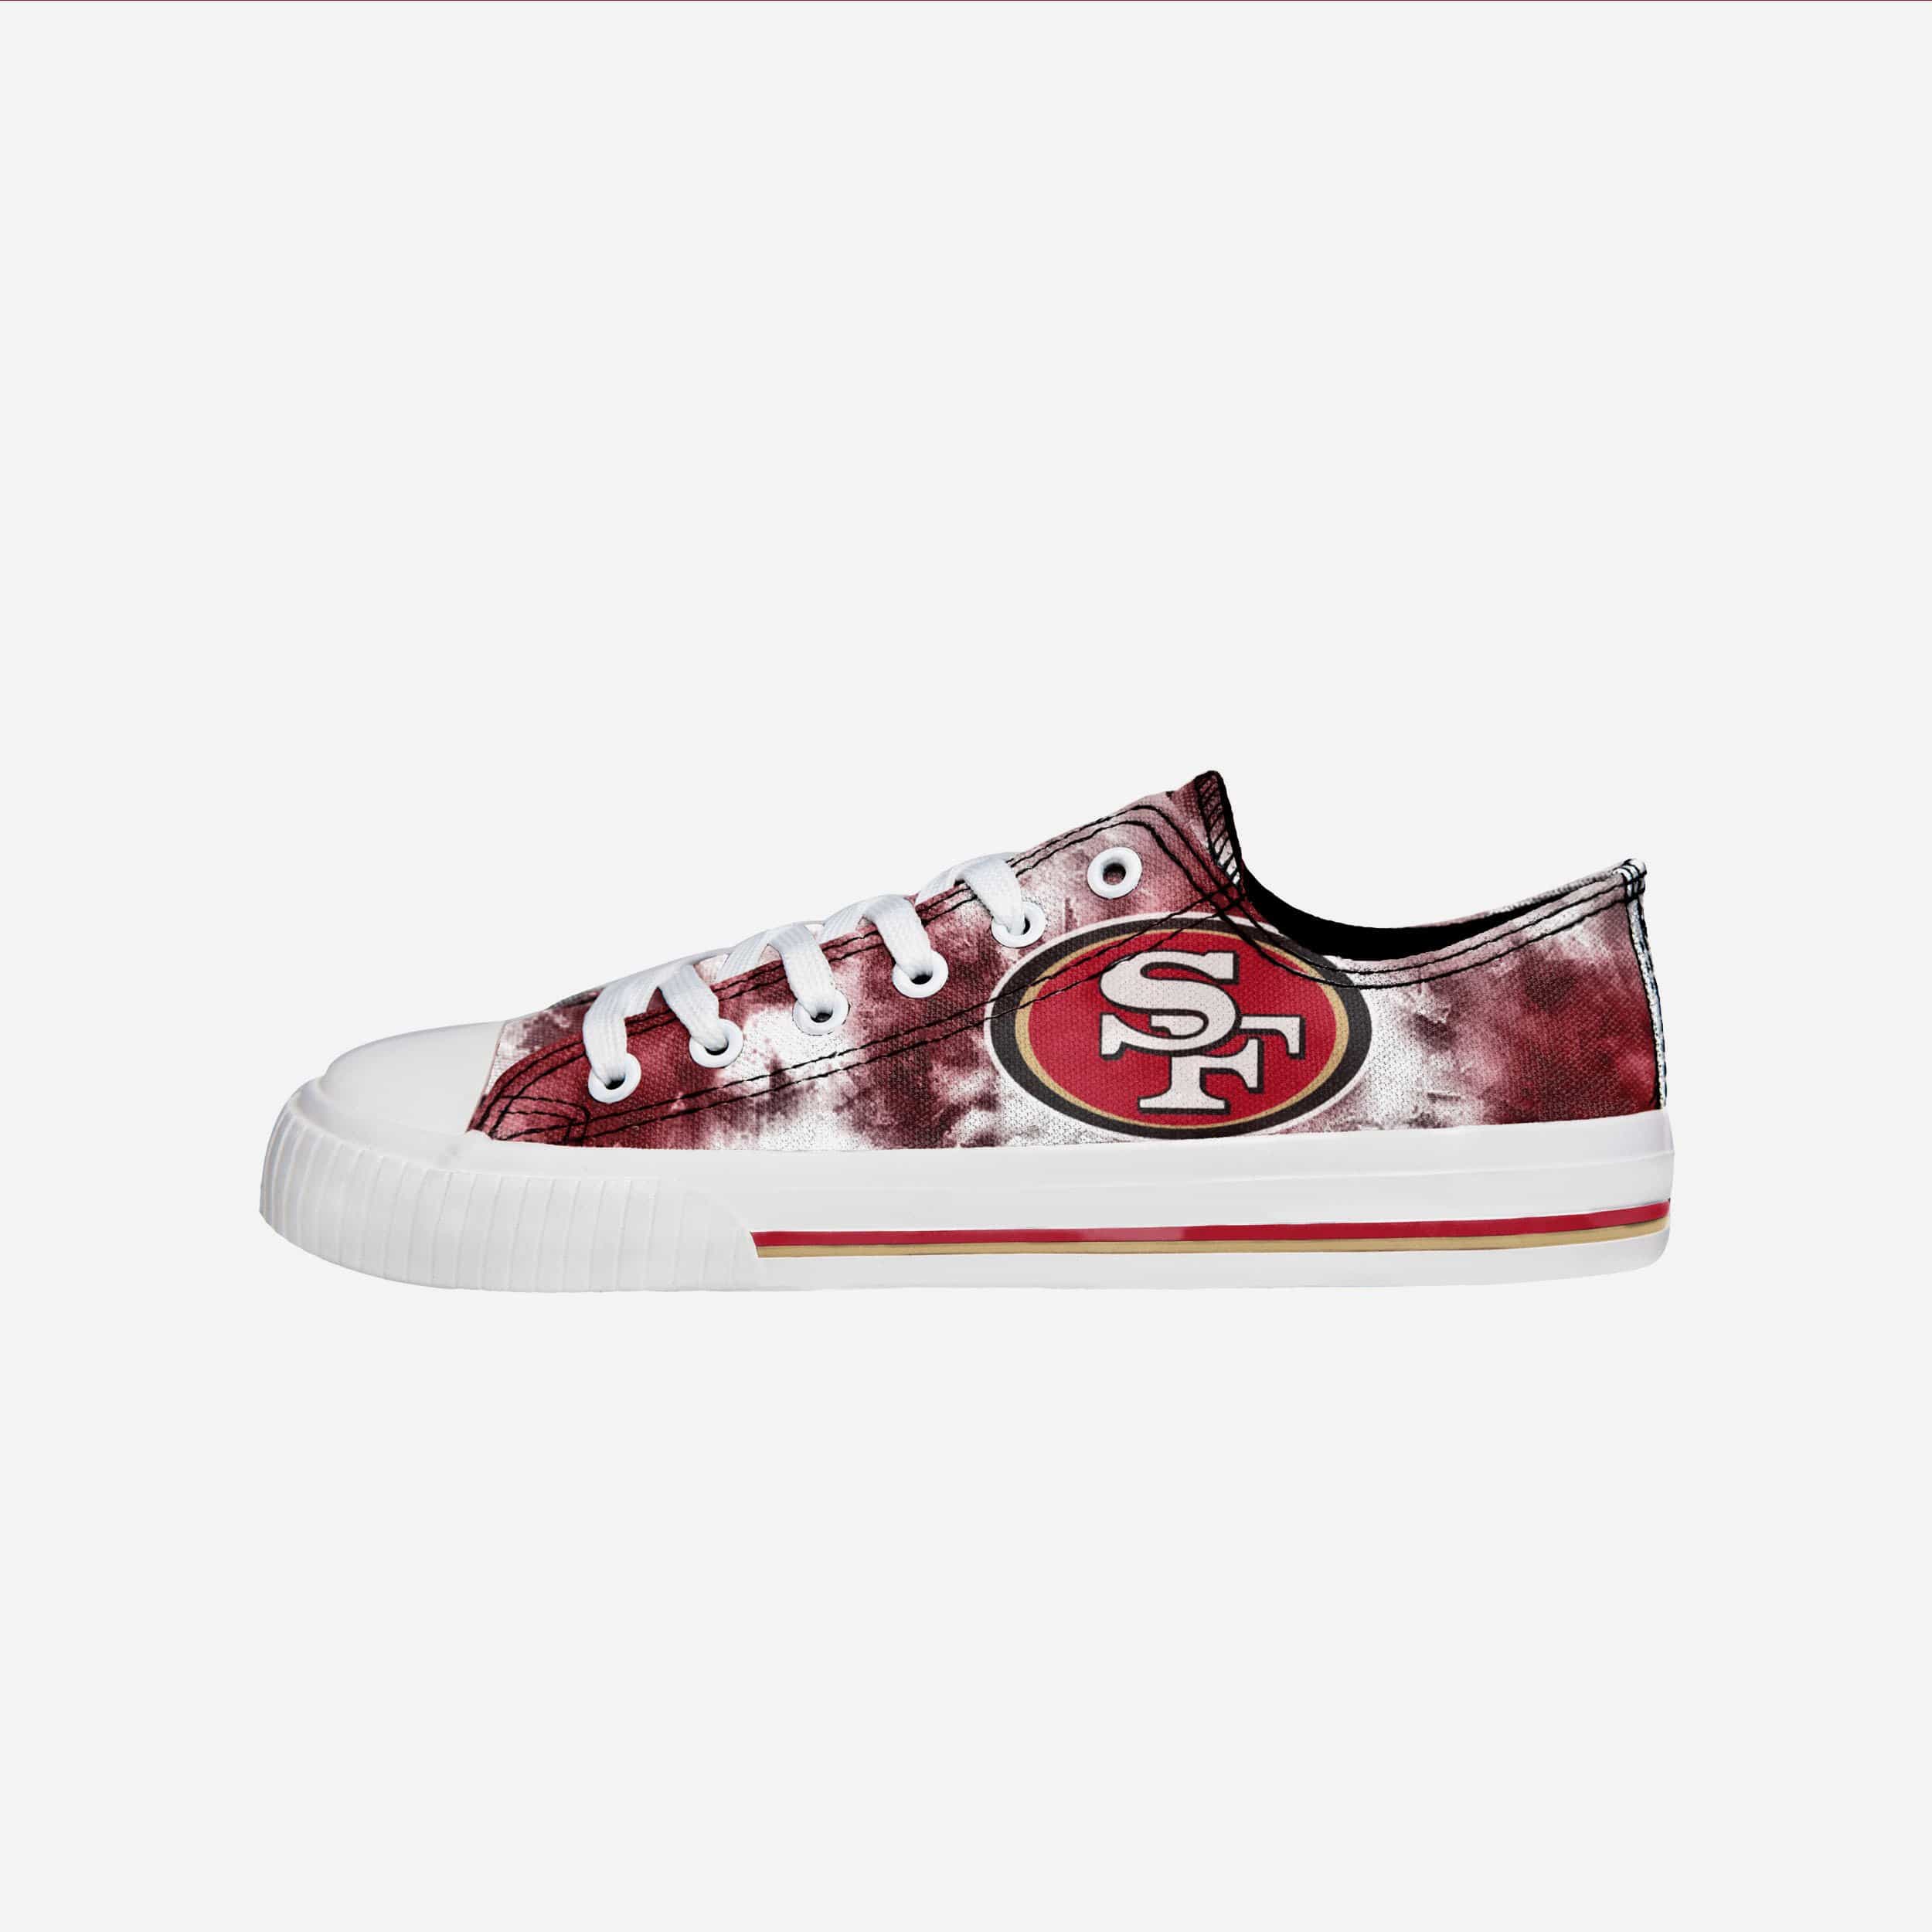 FOCO San Francisco 49ers NFL Womens Low Top Tie Dye Canvas Shoes - 7